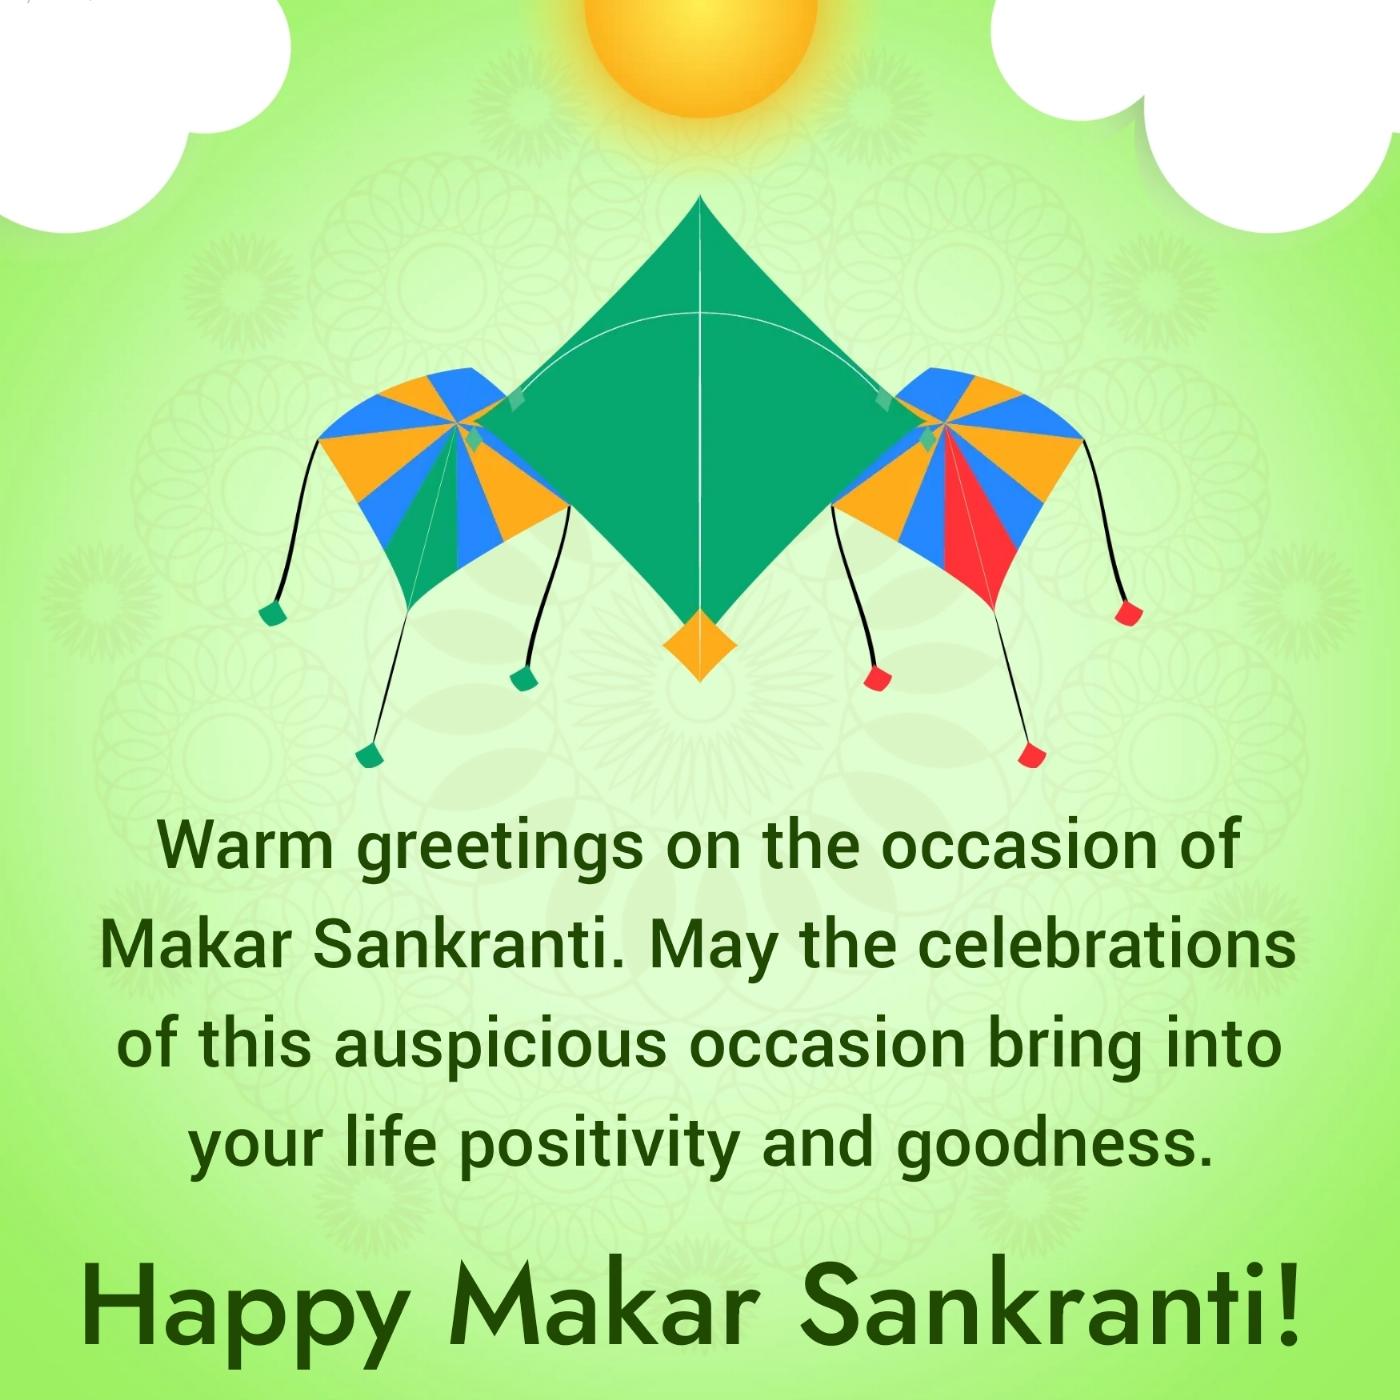 Warm greetings on the occasion of Makar Sankranti